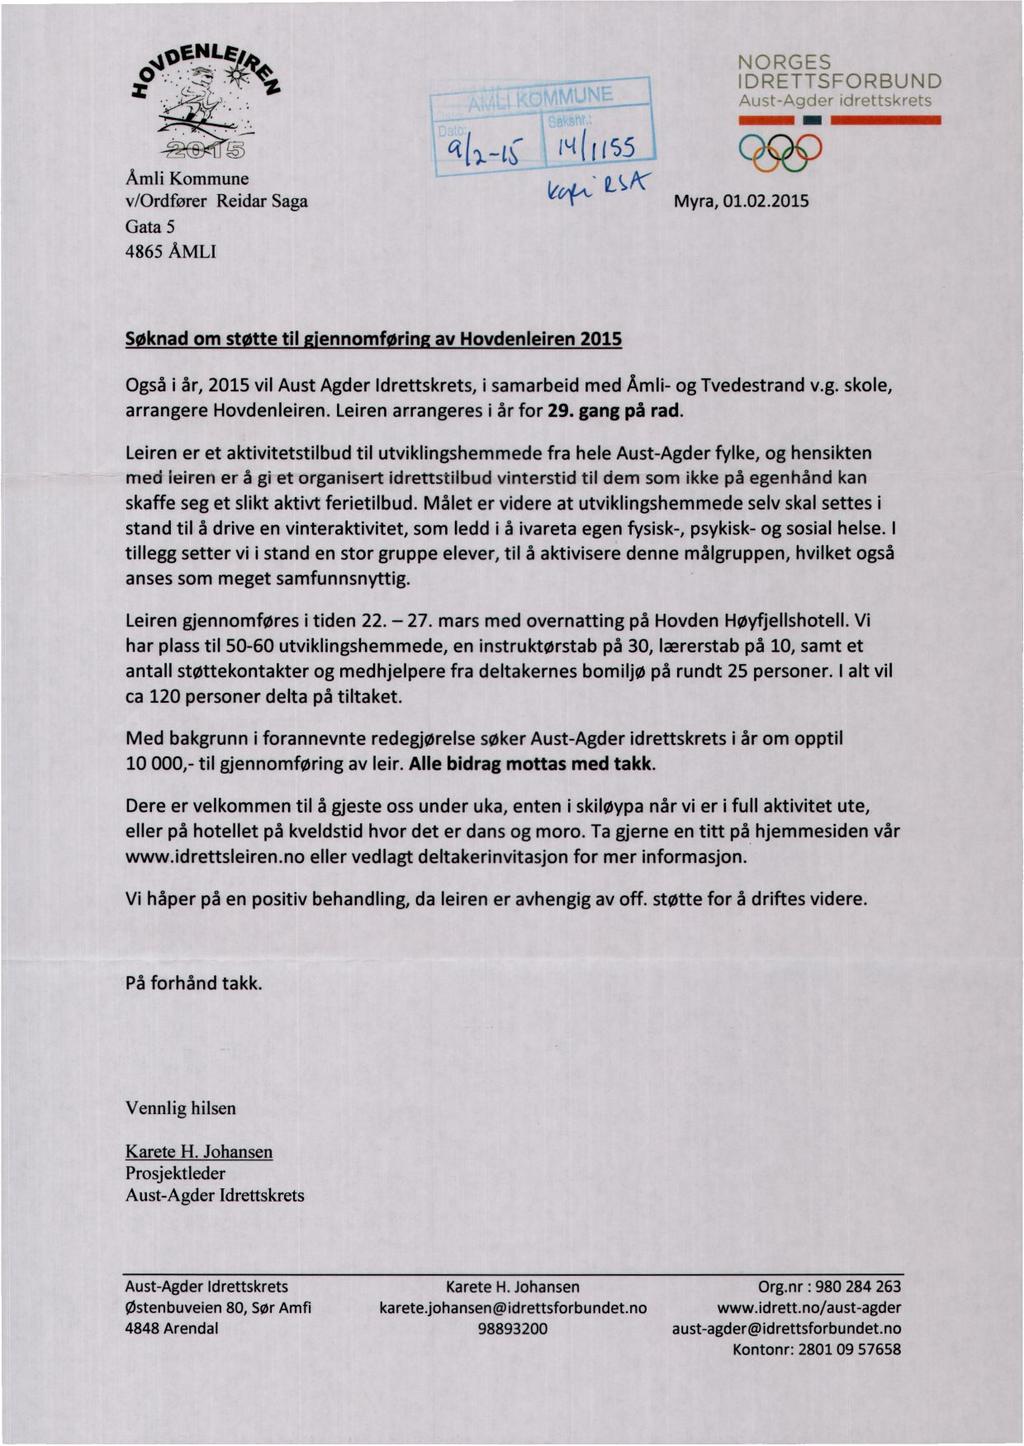 Åmli Kommune v/ordfører Reidar Saga Gata 5 4865 ÅMLI ;L( v&y. ss -RET c,':orbund OR9 myra, 01.02.